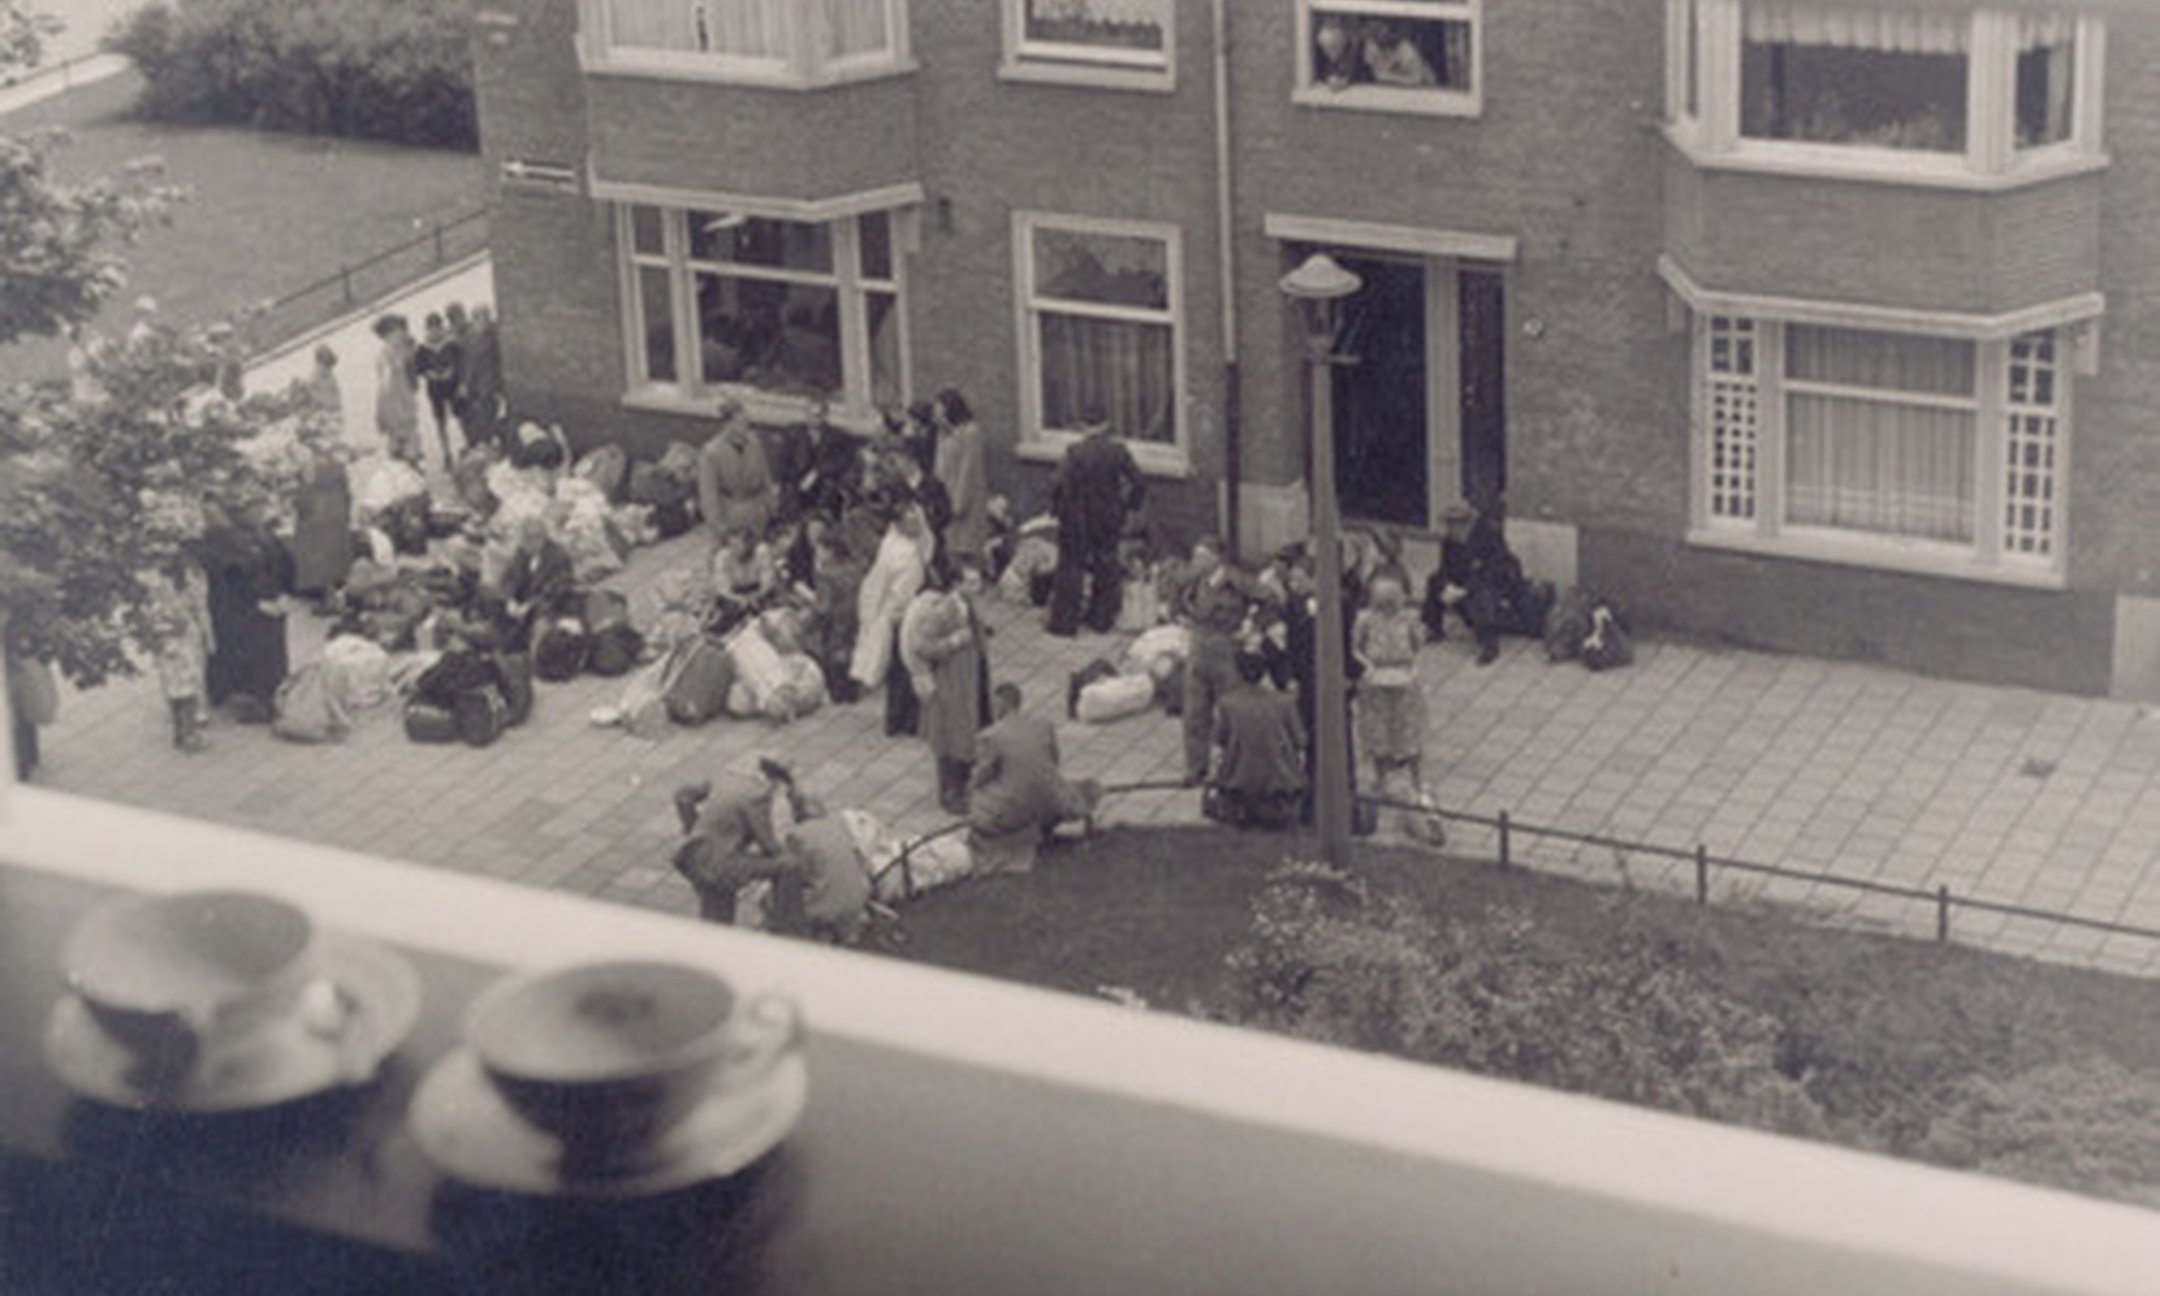 Jews with luggage during a raid. Lekstraat, Amsterdam, 20 June 1943.